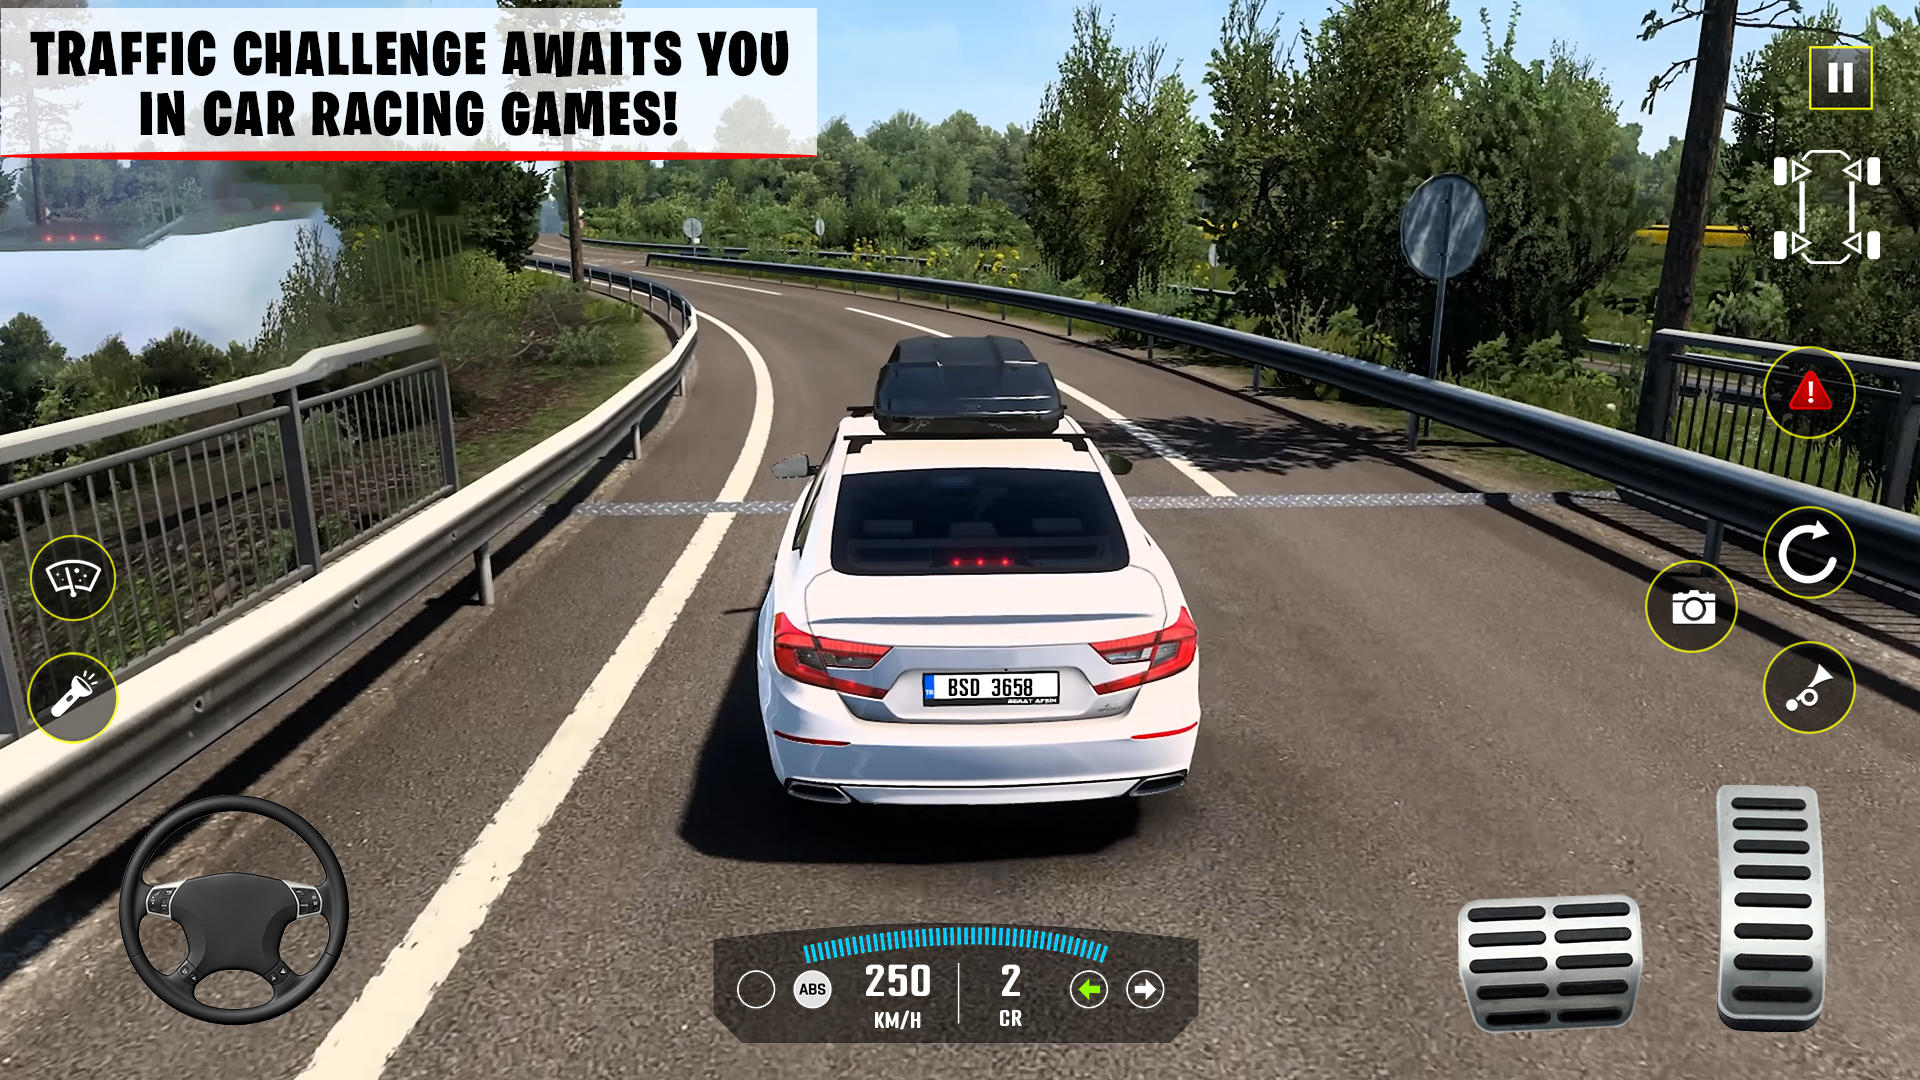 Screenshot 1 of gioco di auto super: guida 3D 1.1